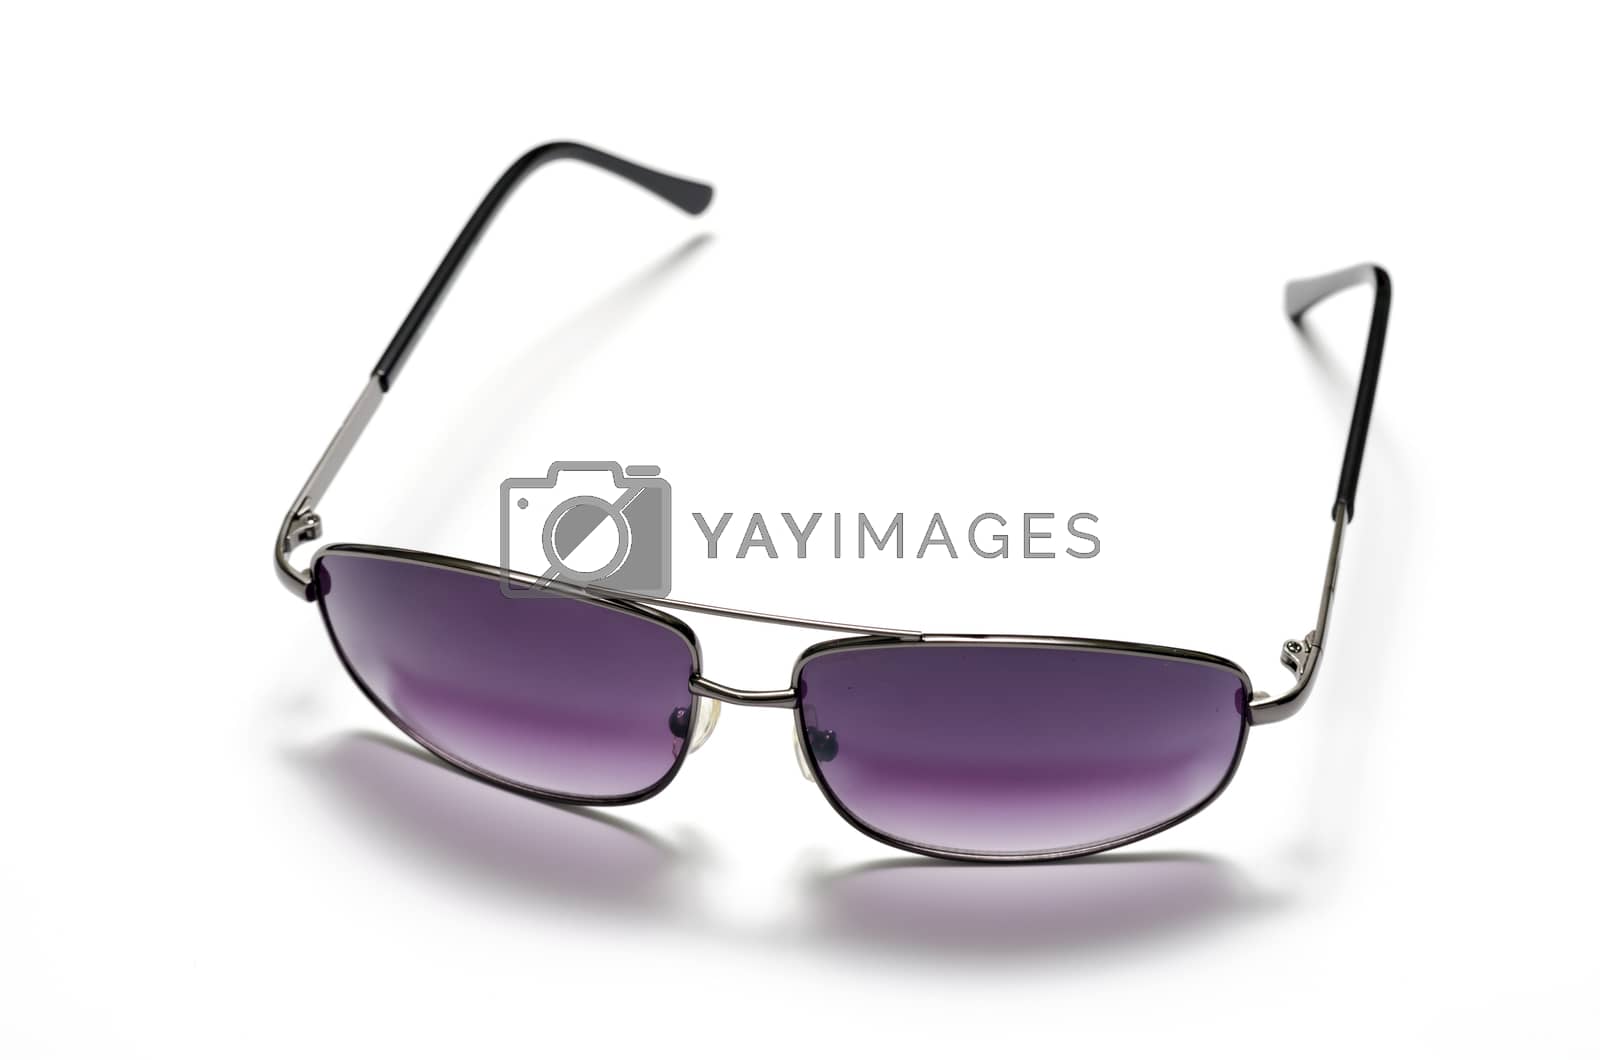 Royalty free image of sunglasses by ammza12